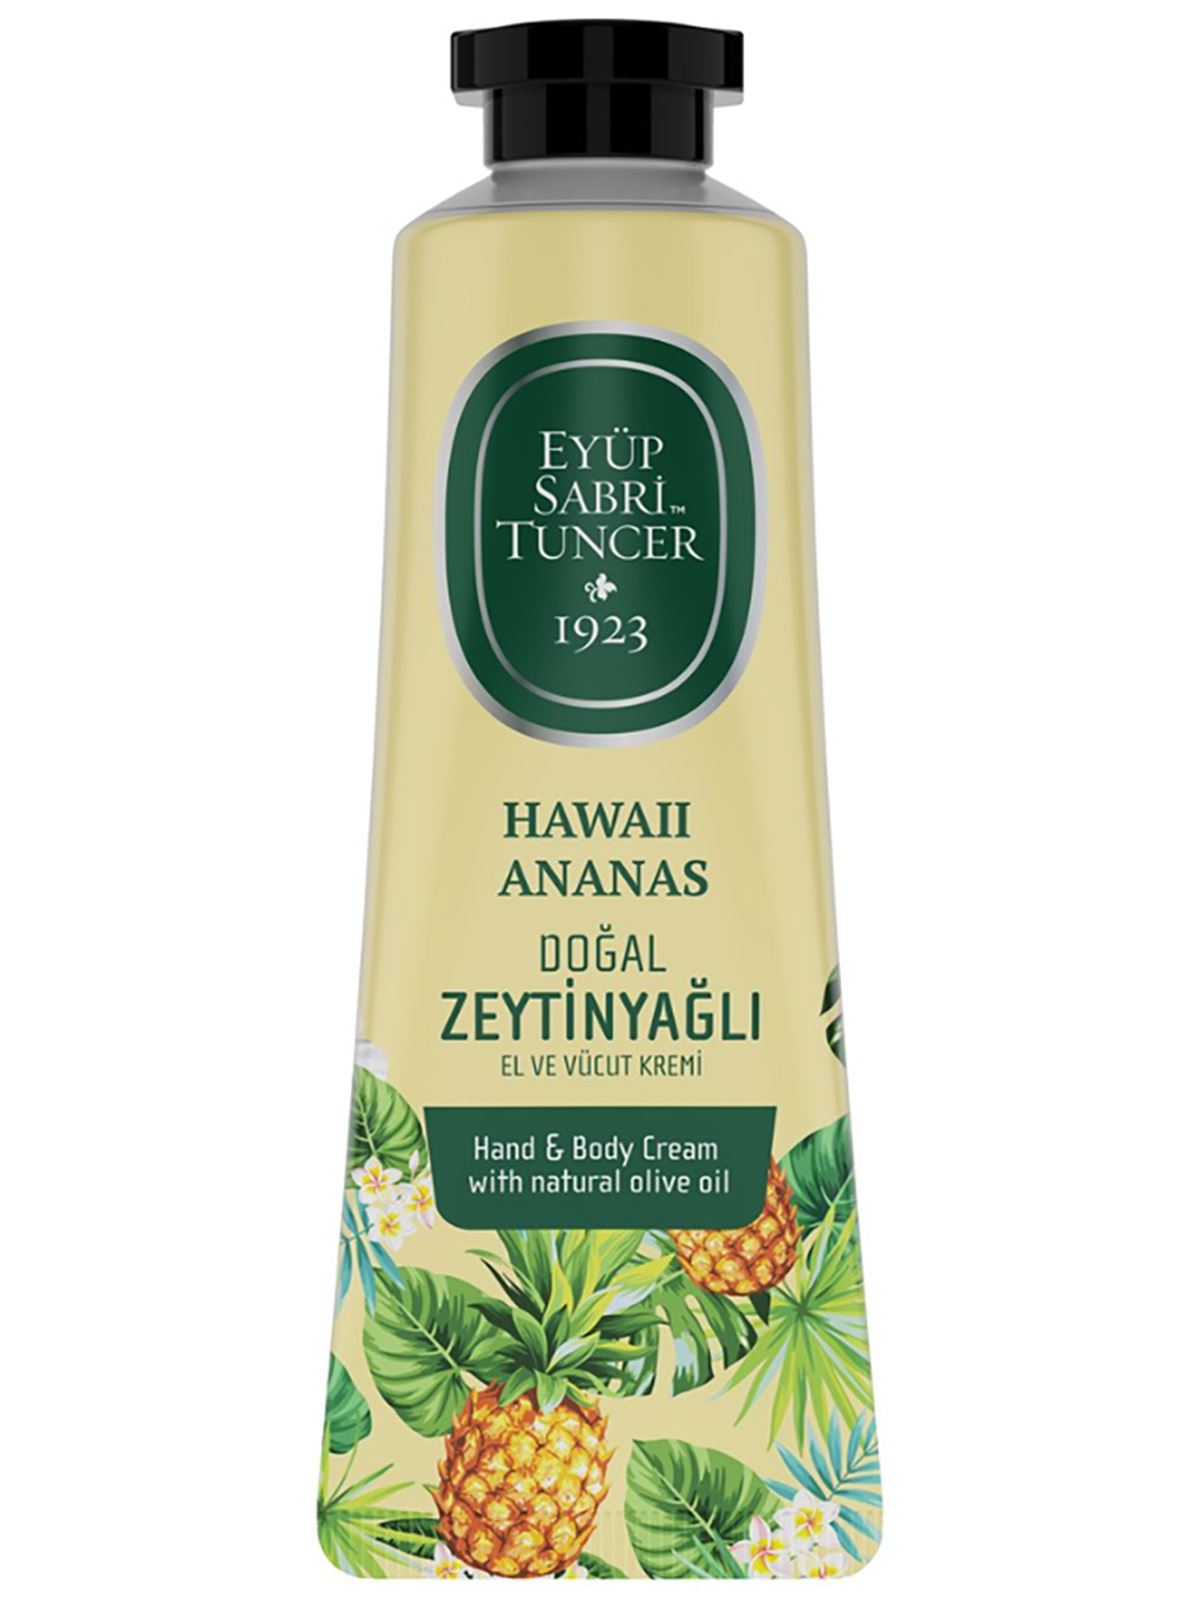 Eyüp Sabri Tuncer Hawaii Ananas Doğal Zeytinyağlı El ve Vücut Kremi 50 ml